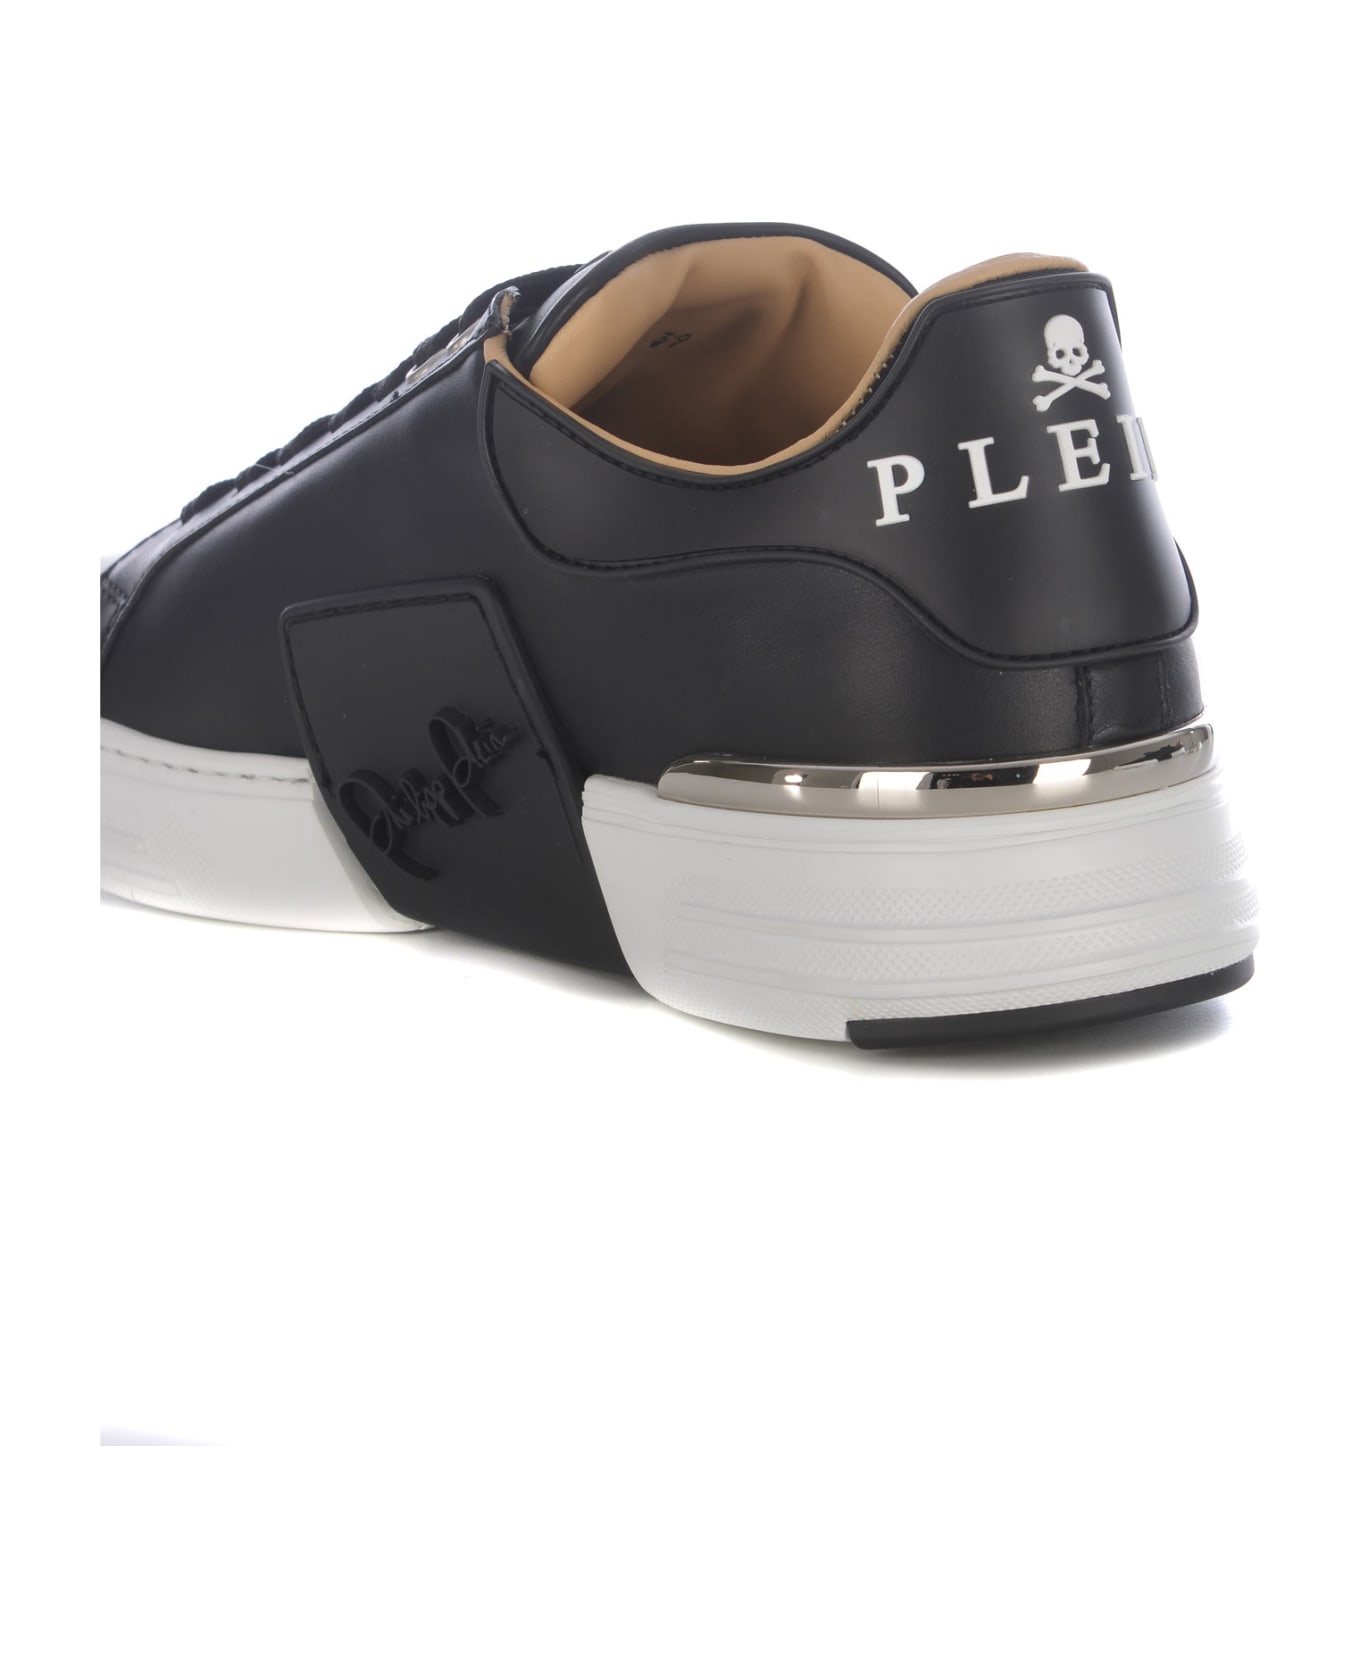 Philipp Plein Sneakers Philipp Plein "phantom" In Leather - Nero スニーカー